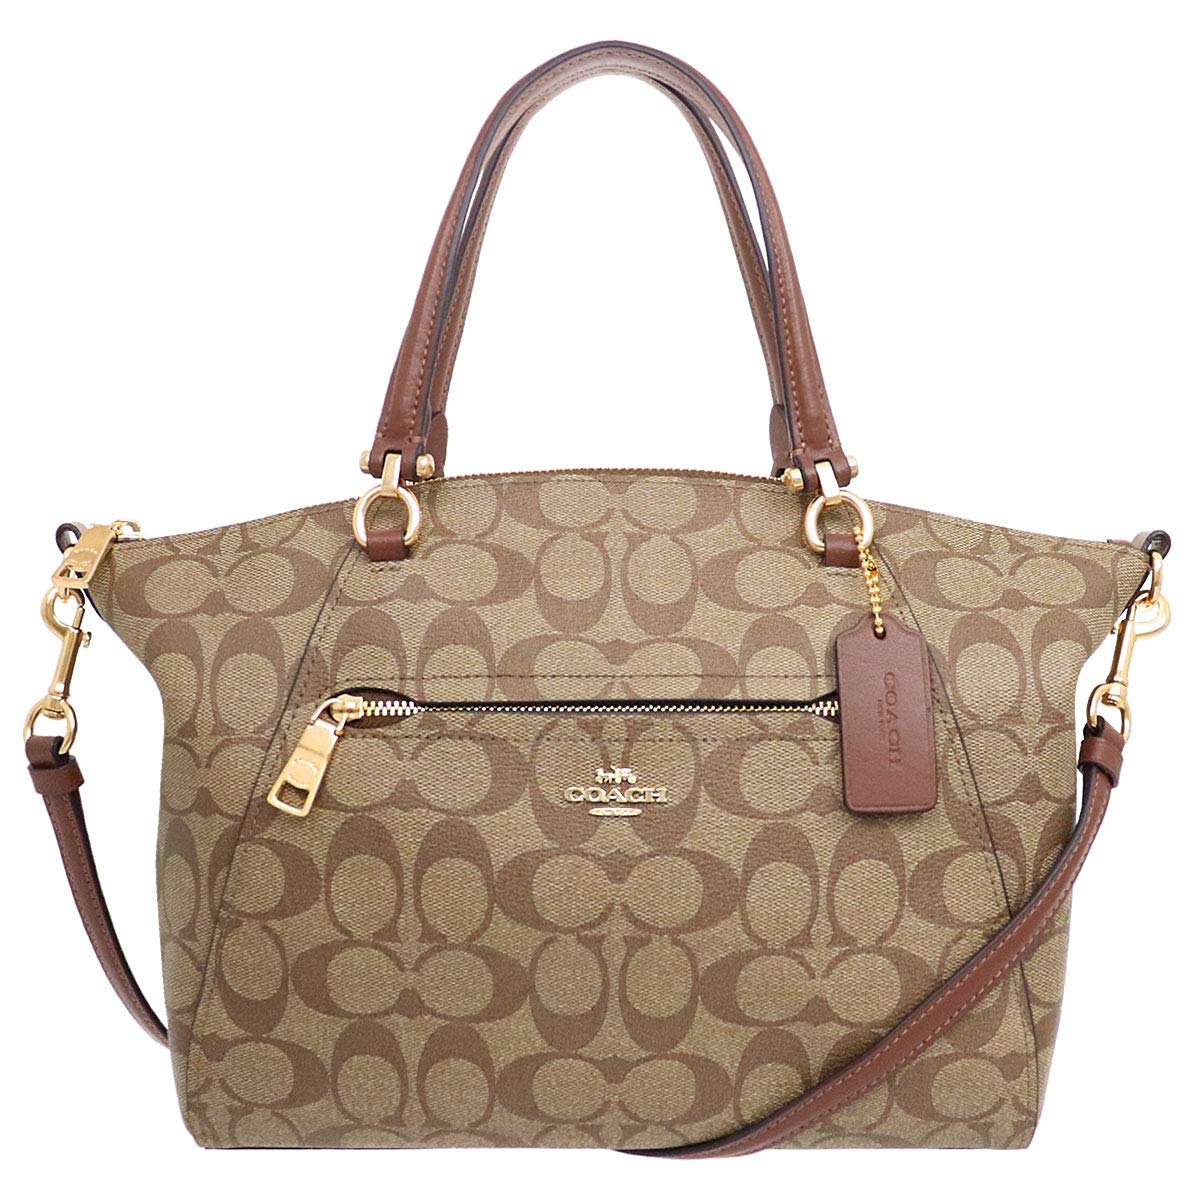 [Coach] Bag (Handbag) F79998 Signature Prairie Satchel Ladies [Outlet Product] [Brand] [Parallel Import]